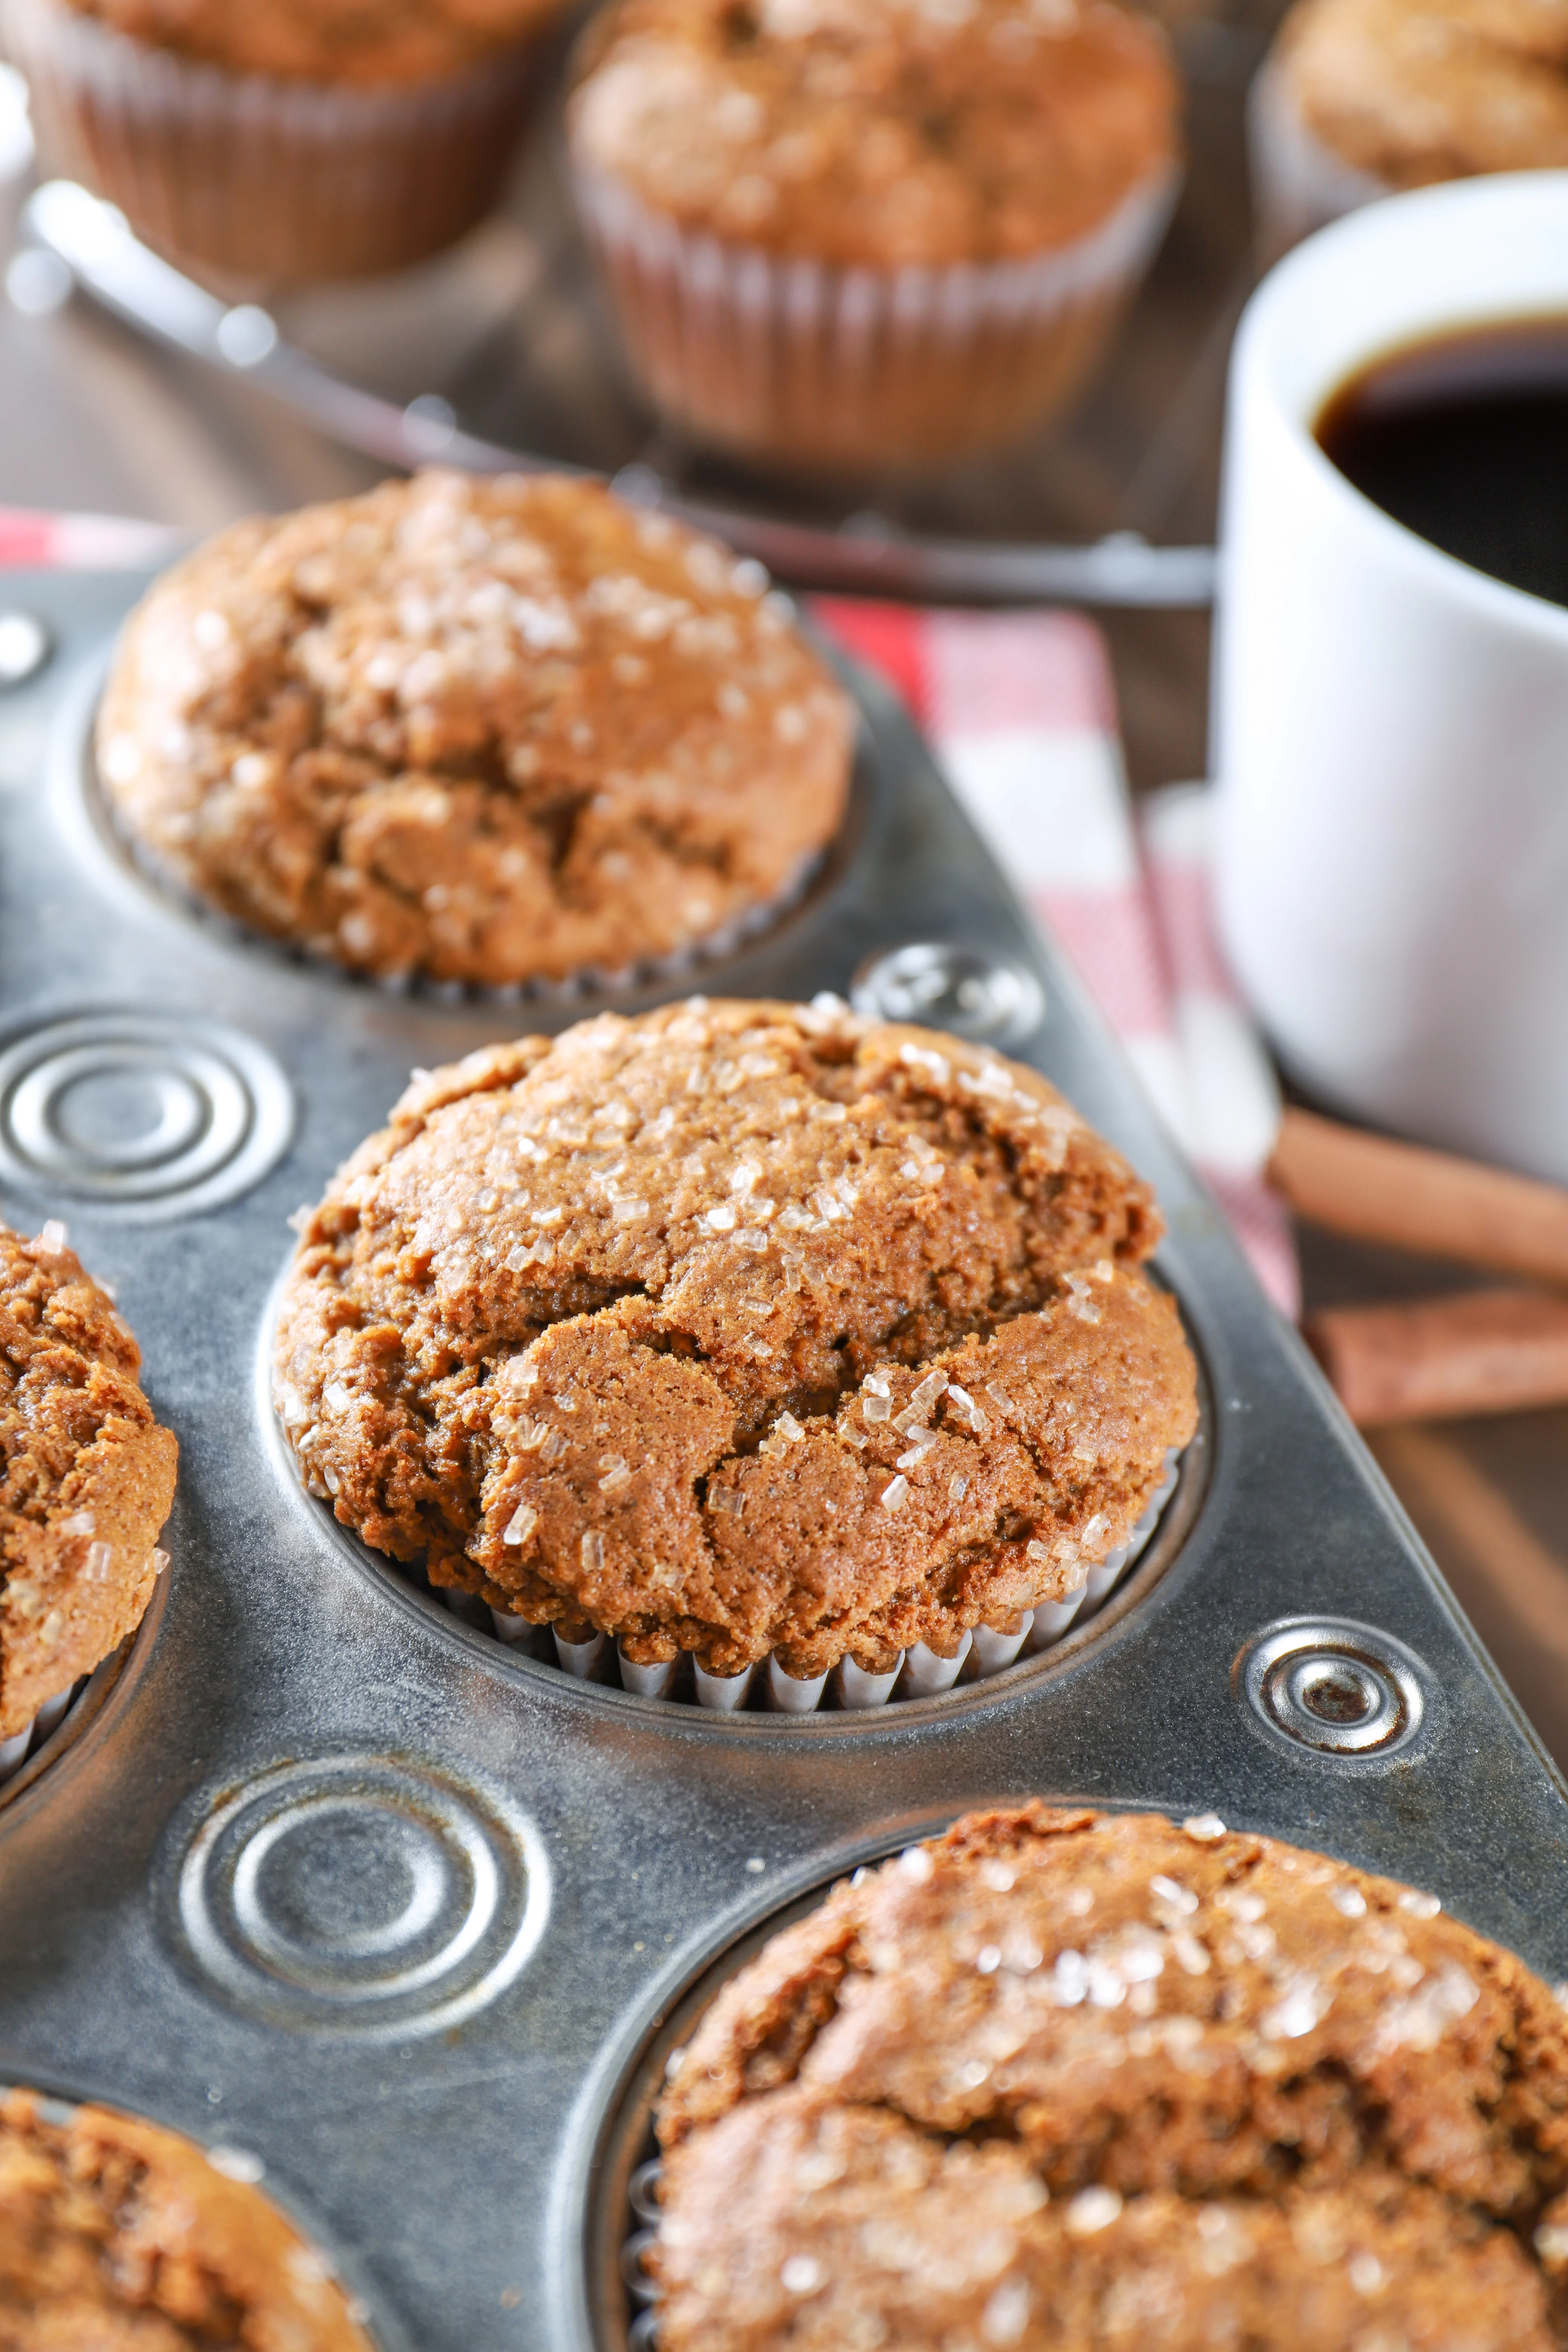 https://www.a-kitchen-addiction.com/wp-content/uploads/2019/12/bakery-style-gingerbread-muffins-vert.jpg.webp